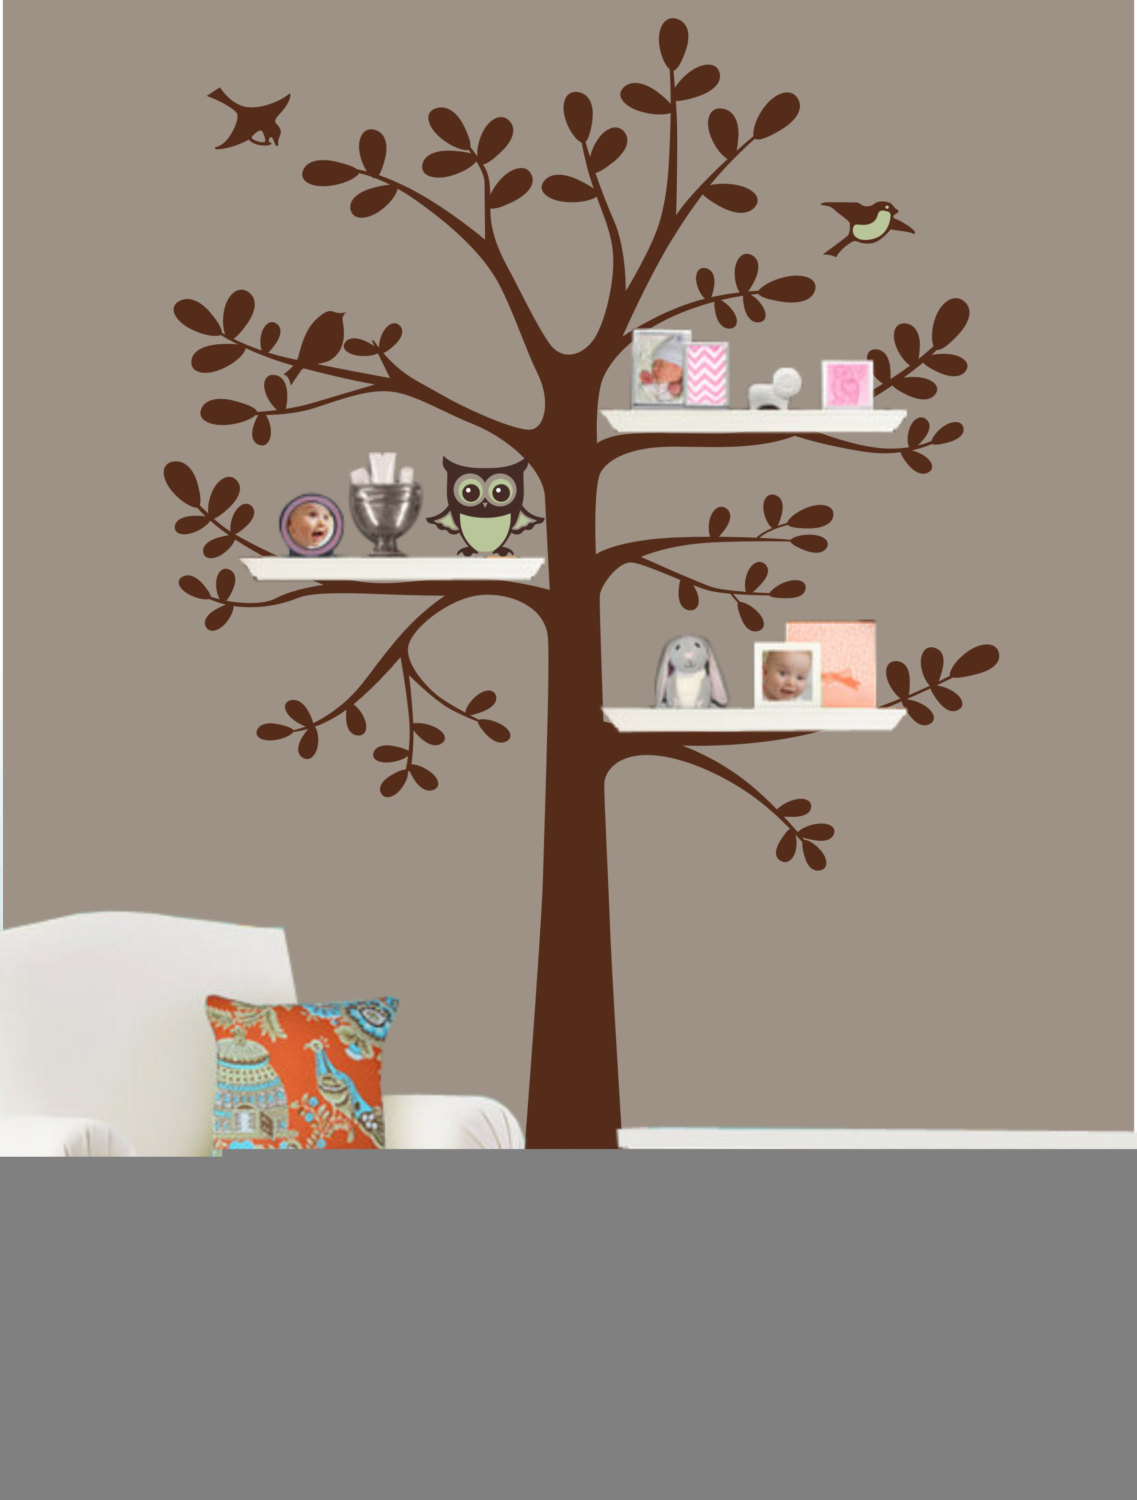 Shelf Tree Decal - Tree Decal With Owl - Owl Nursery Theme - Shelf Organizer Decal - Tree Bookshelf - Wall Decal Tree Silhouette R848